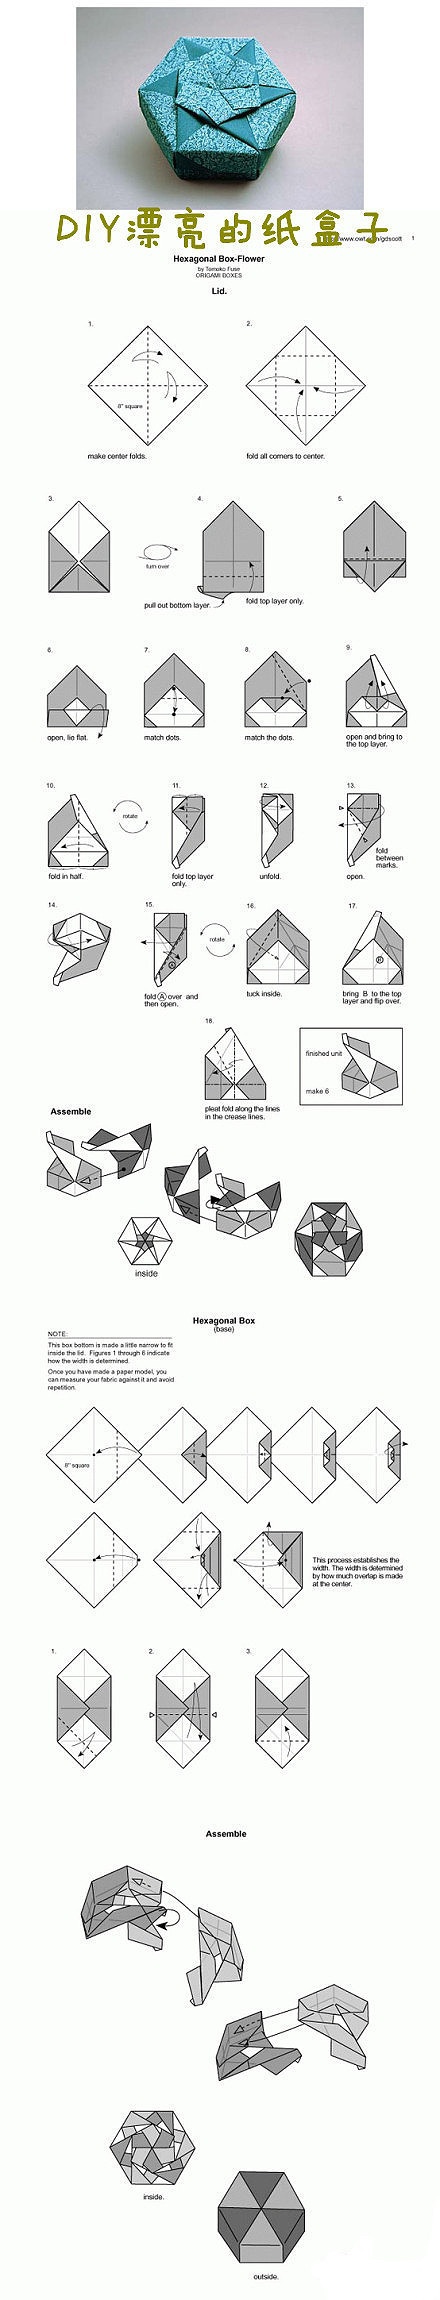 origami hexagon box instructions